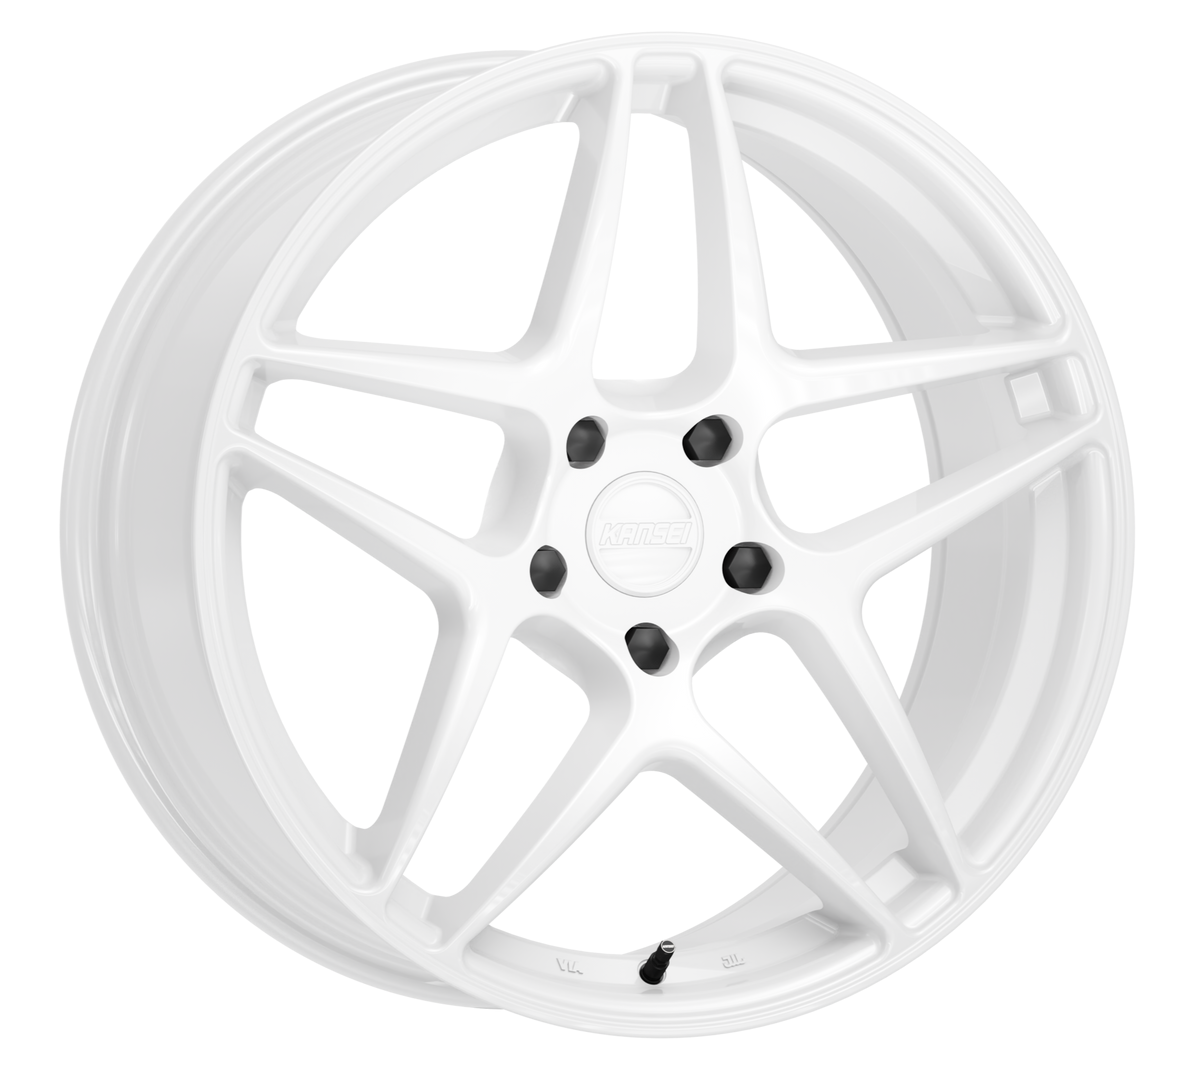 K15W ASTRO Wheel, Size: 18" x 9.50", Bolt Pattern: 5 x 100 mm, Backspace: 6.12" [Finish: Gloss White]